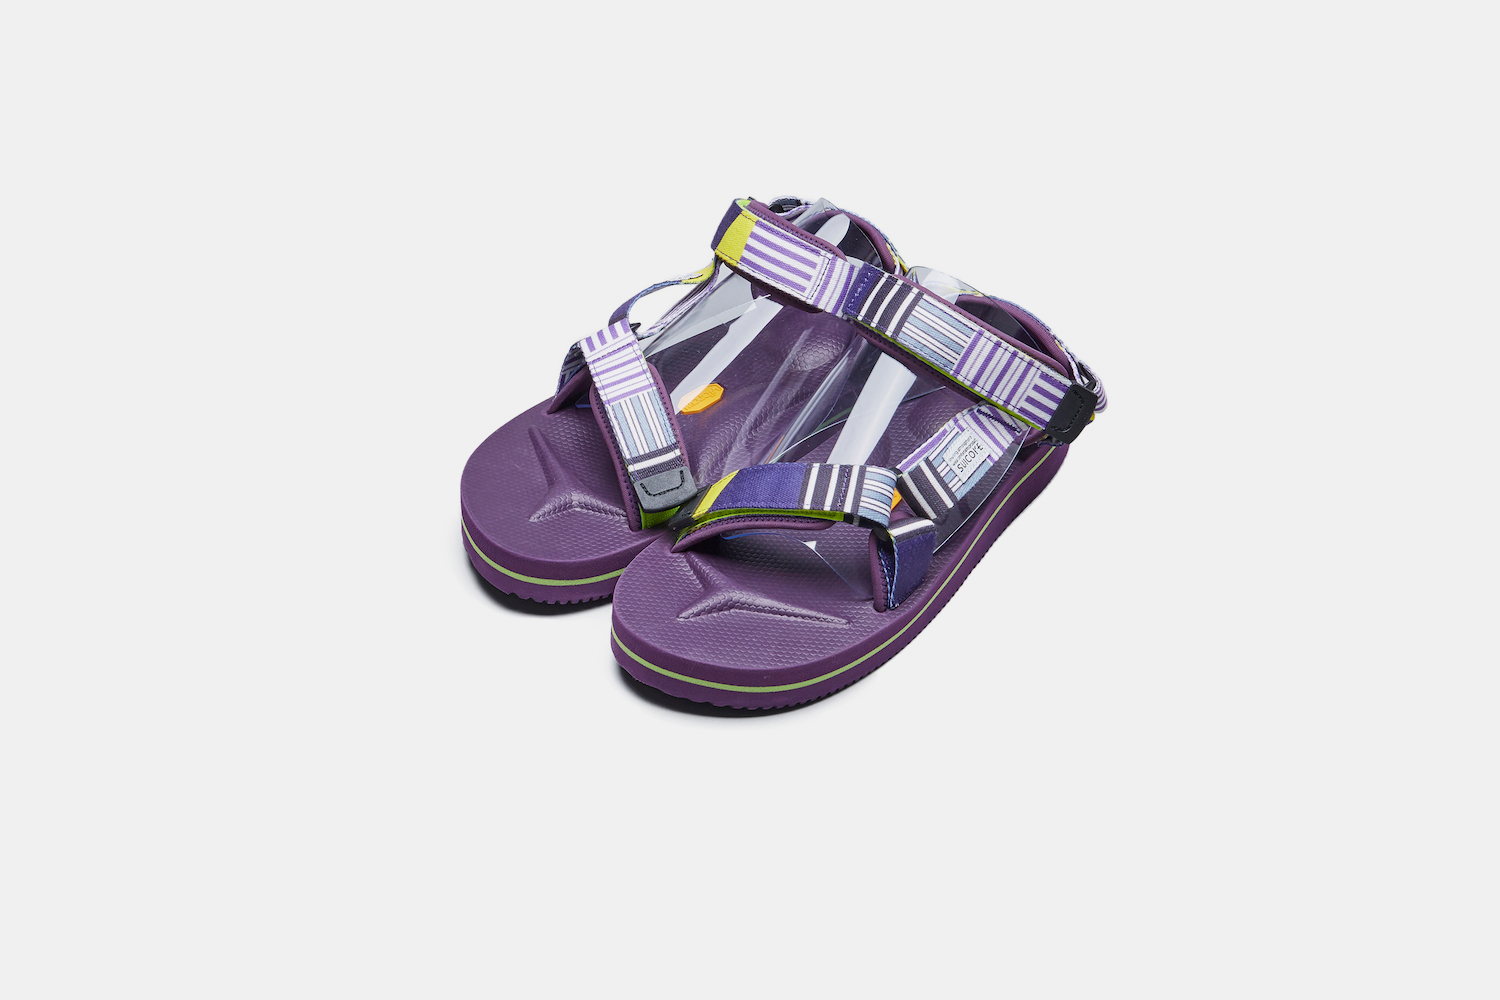 suicoke moto v depa v2 sandals purple neon release date price info